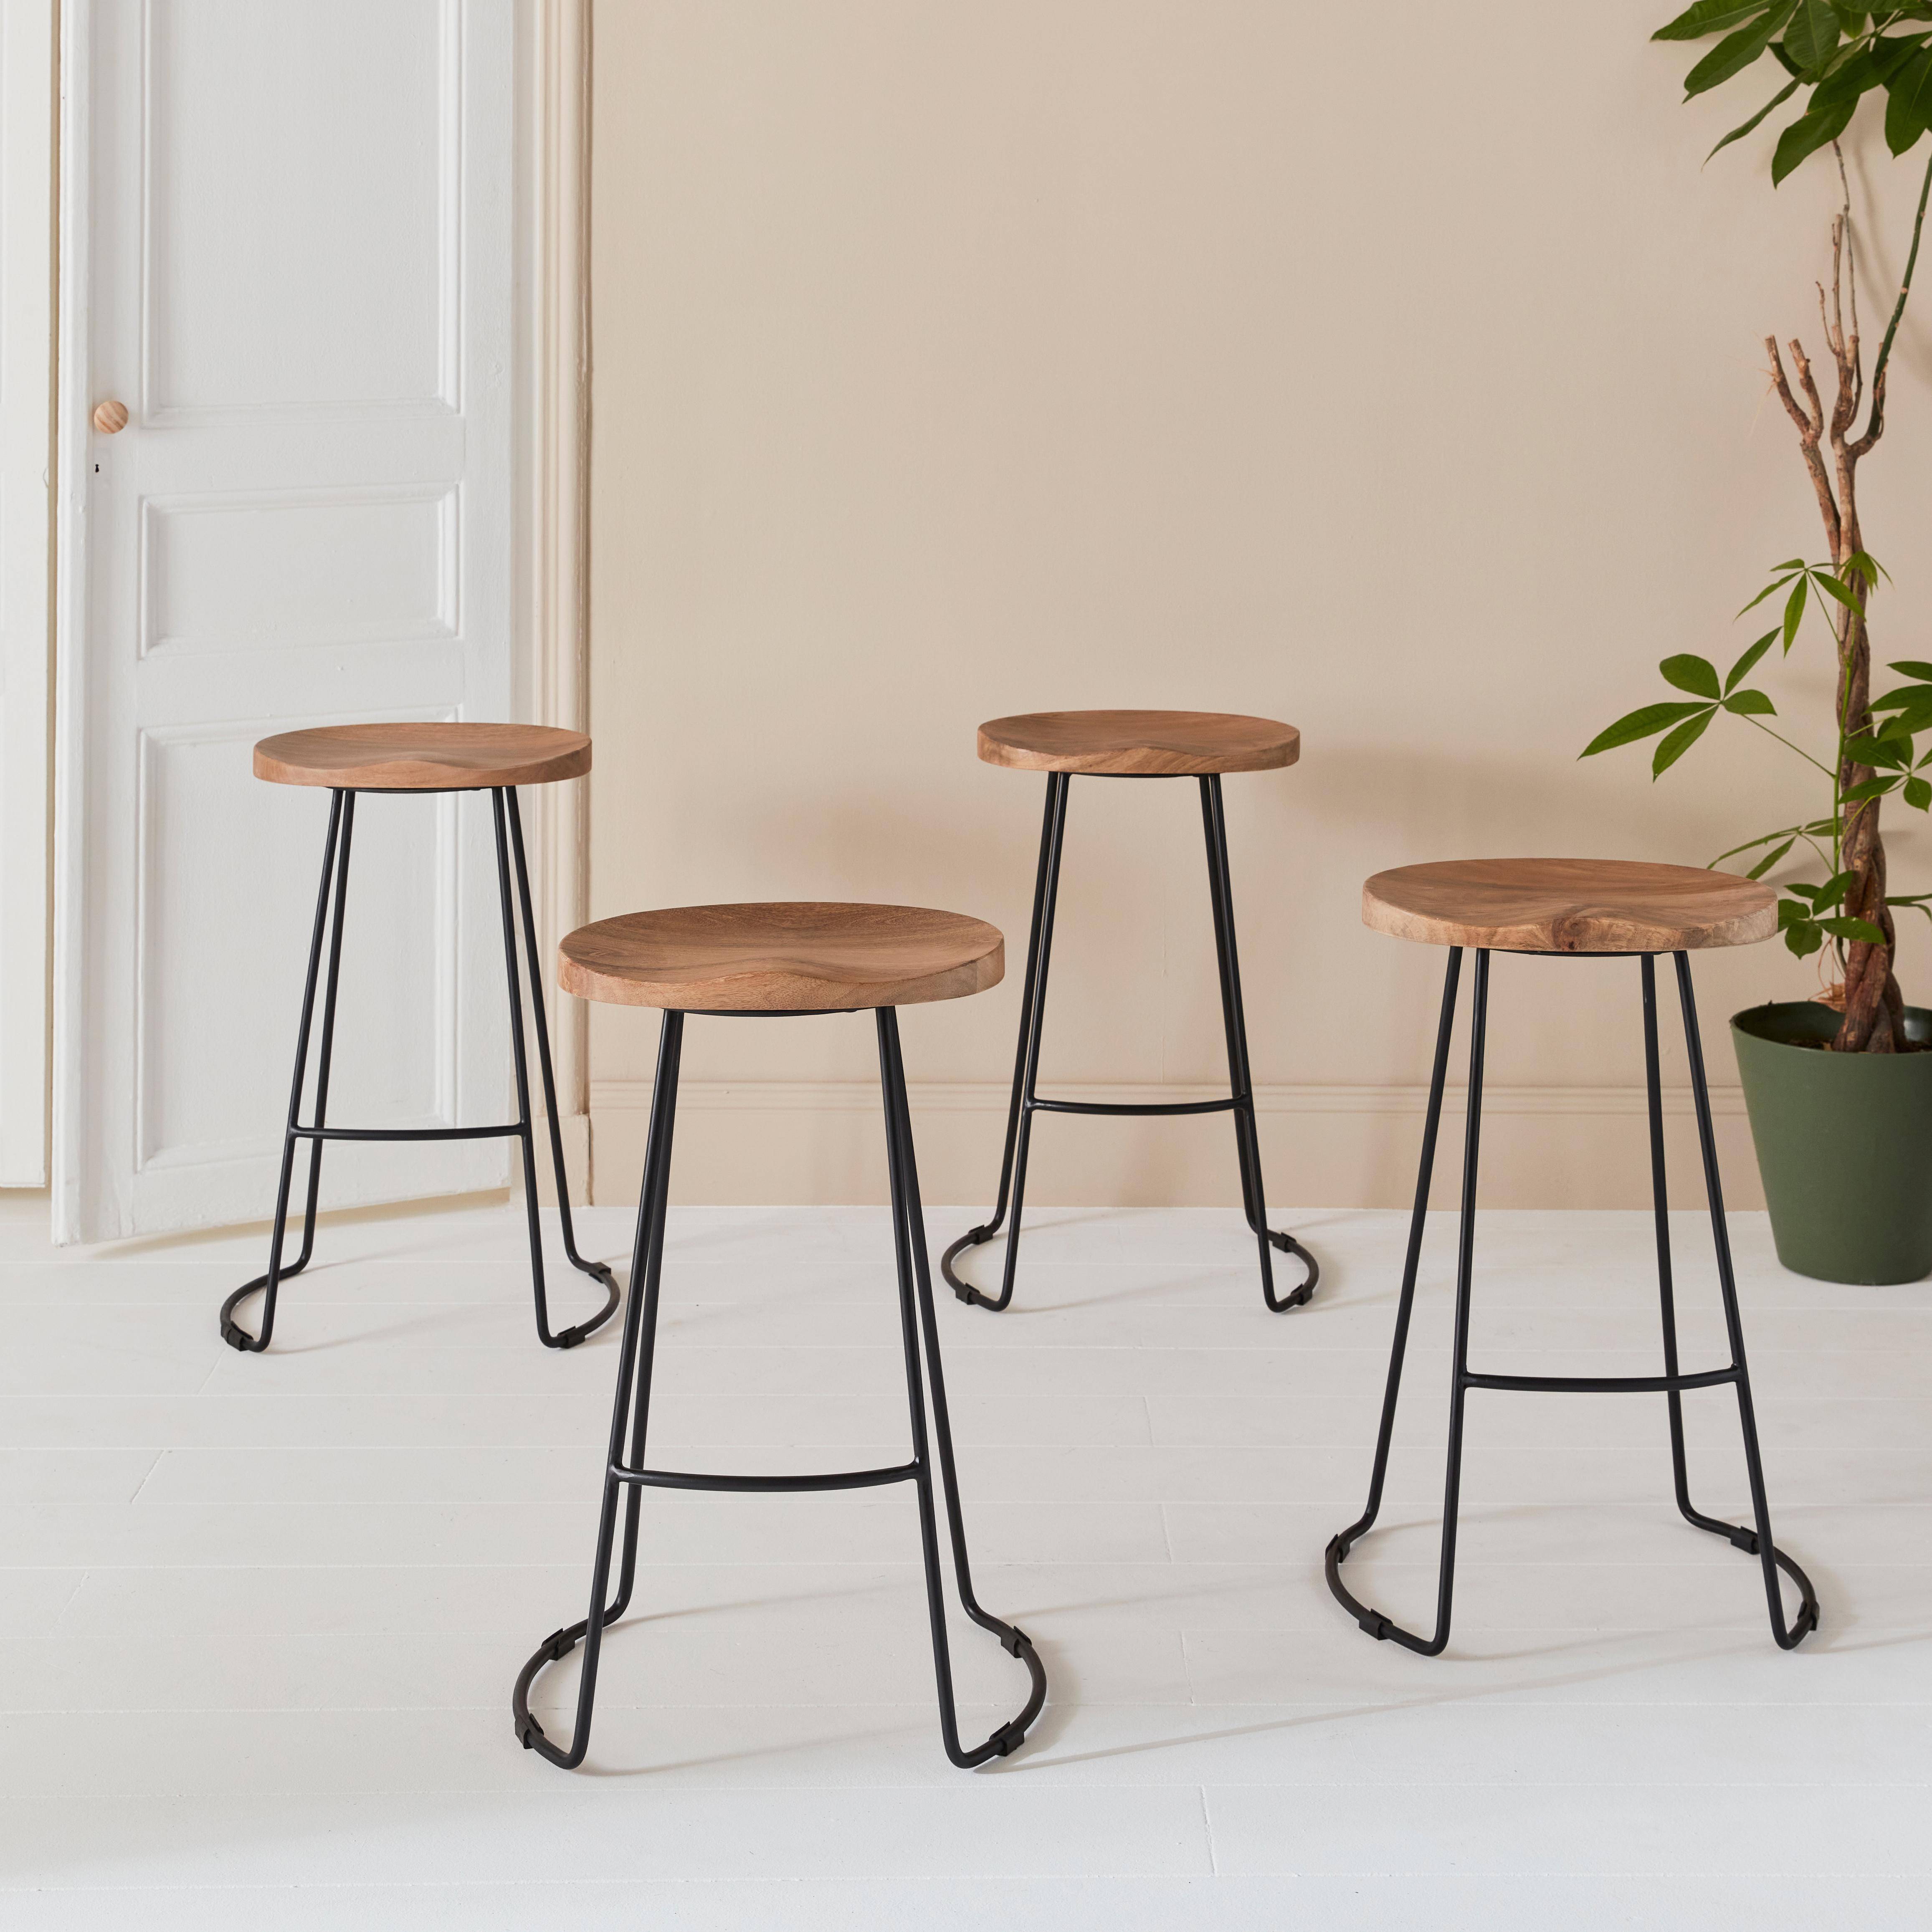 Set of 4 industrial metal and wooden bar stools, 44x36x65cm, Jaya, Mango wood seat, black metal legs,sweeek,Photo2